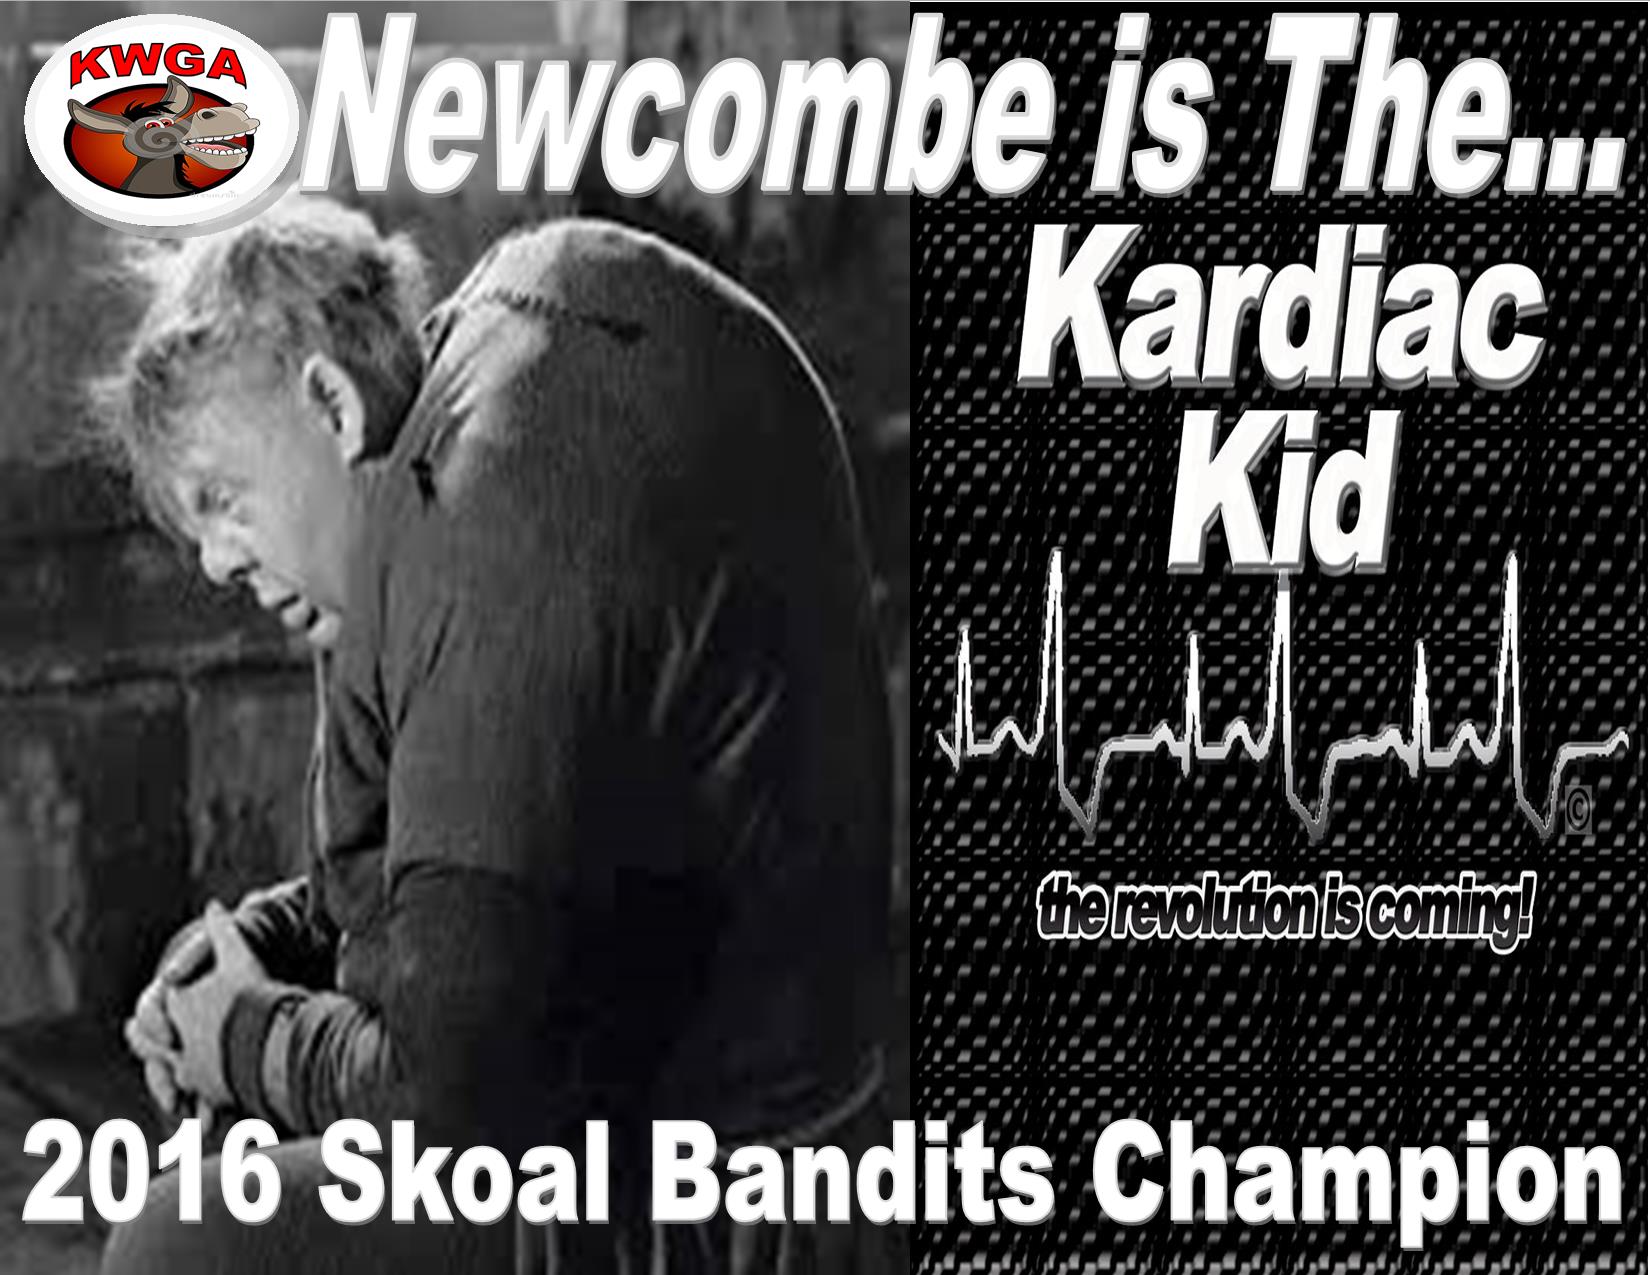 2016 Skoal Bandits Champiom- Newcombe